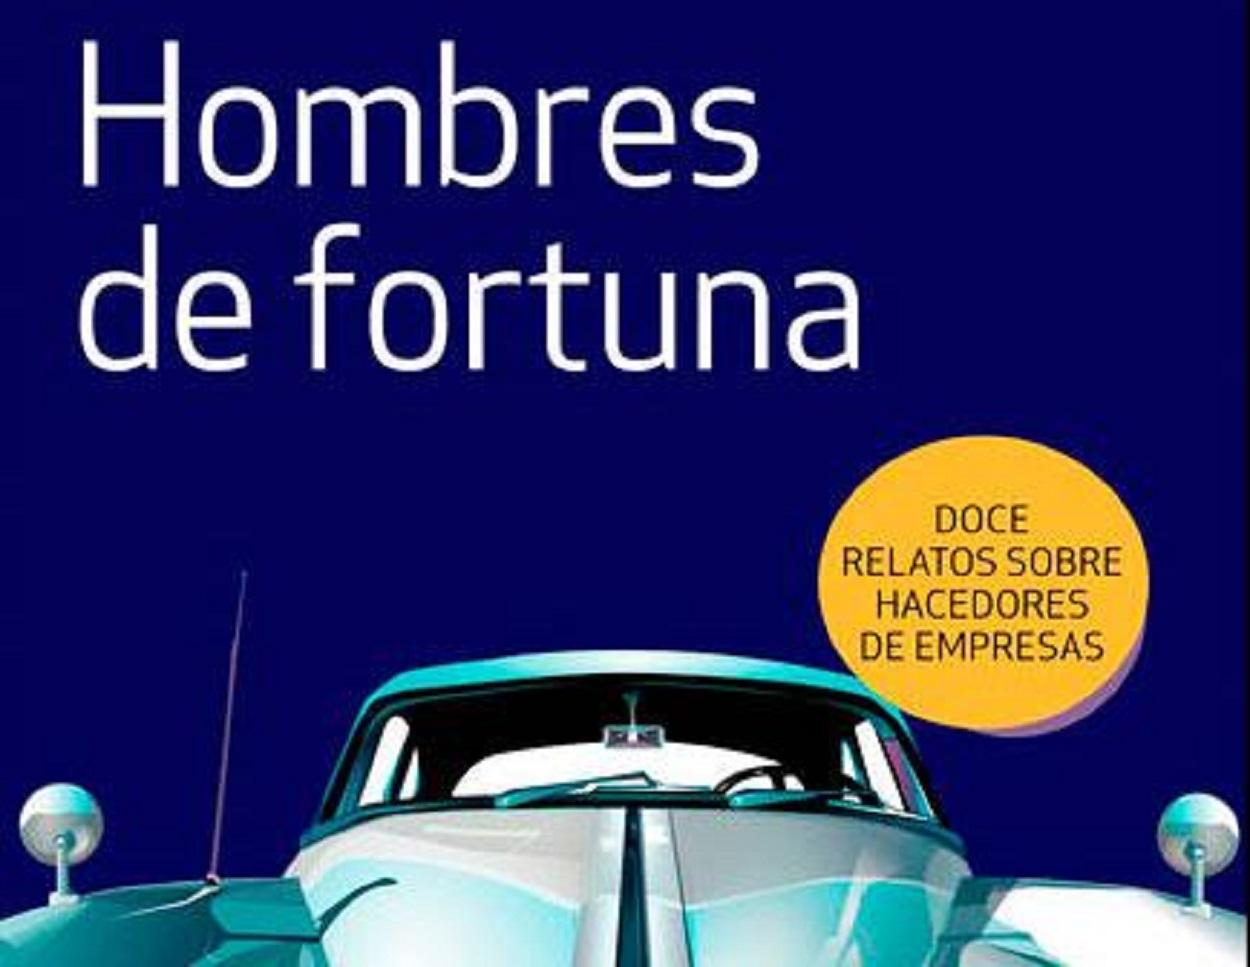 Hombres Fortuna, imagen de la portada del libro